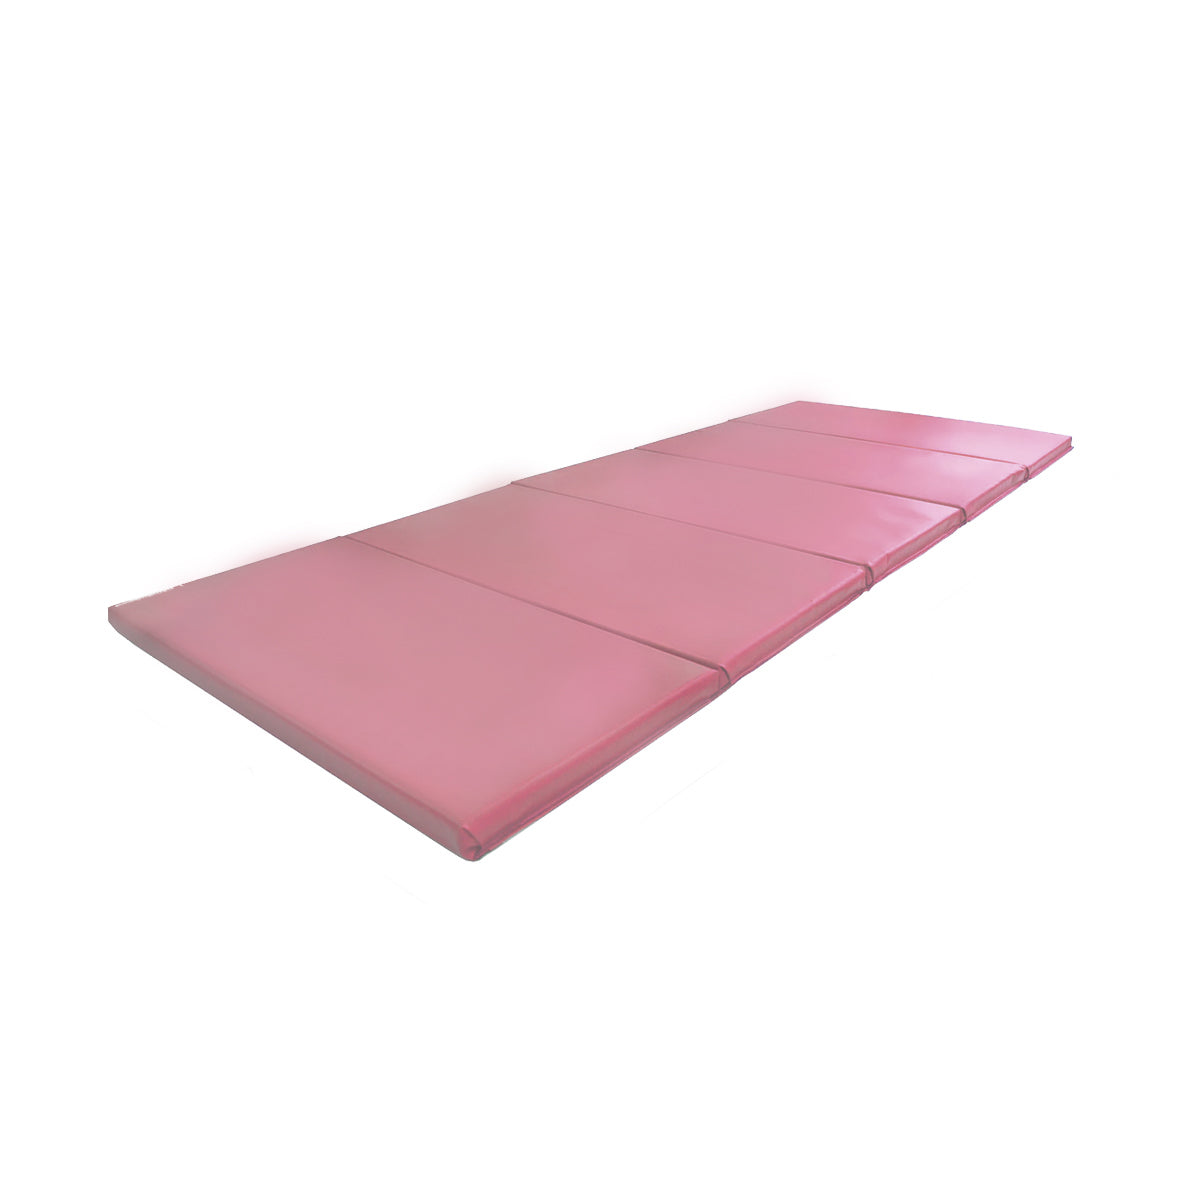 Nicoman Folding Gymnastic Yoga Mat